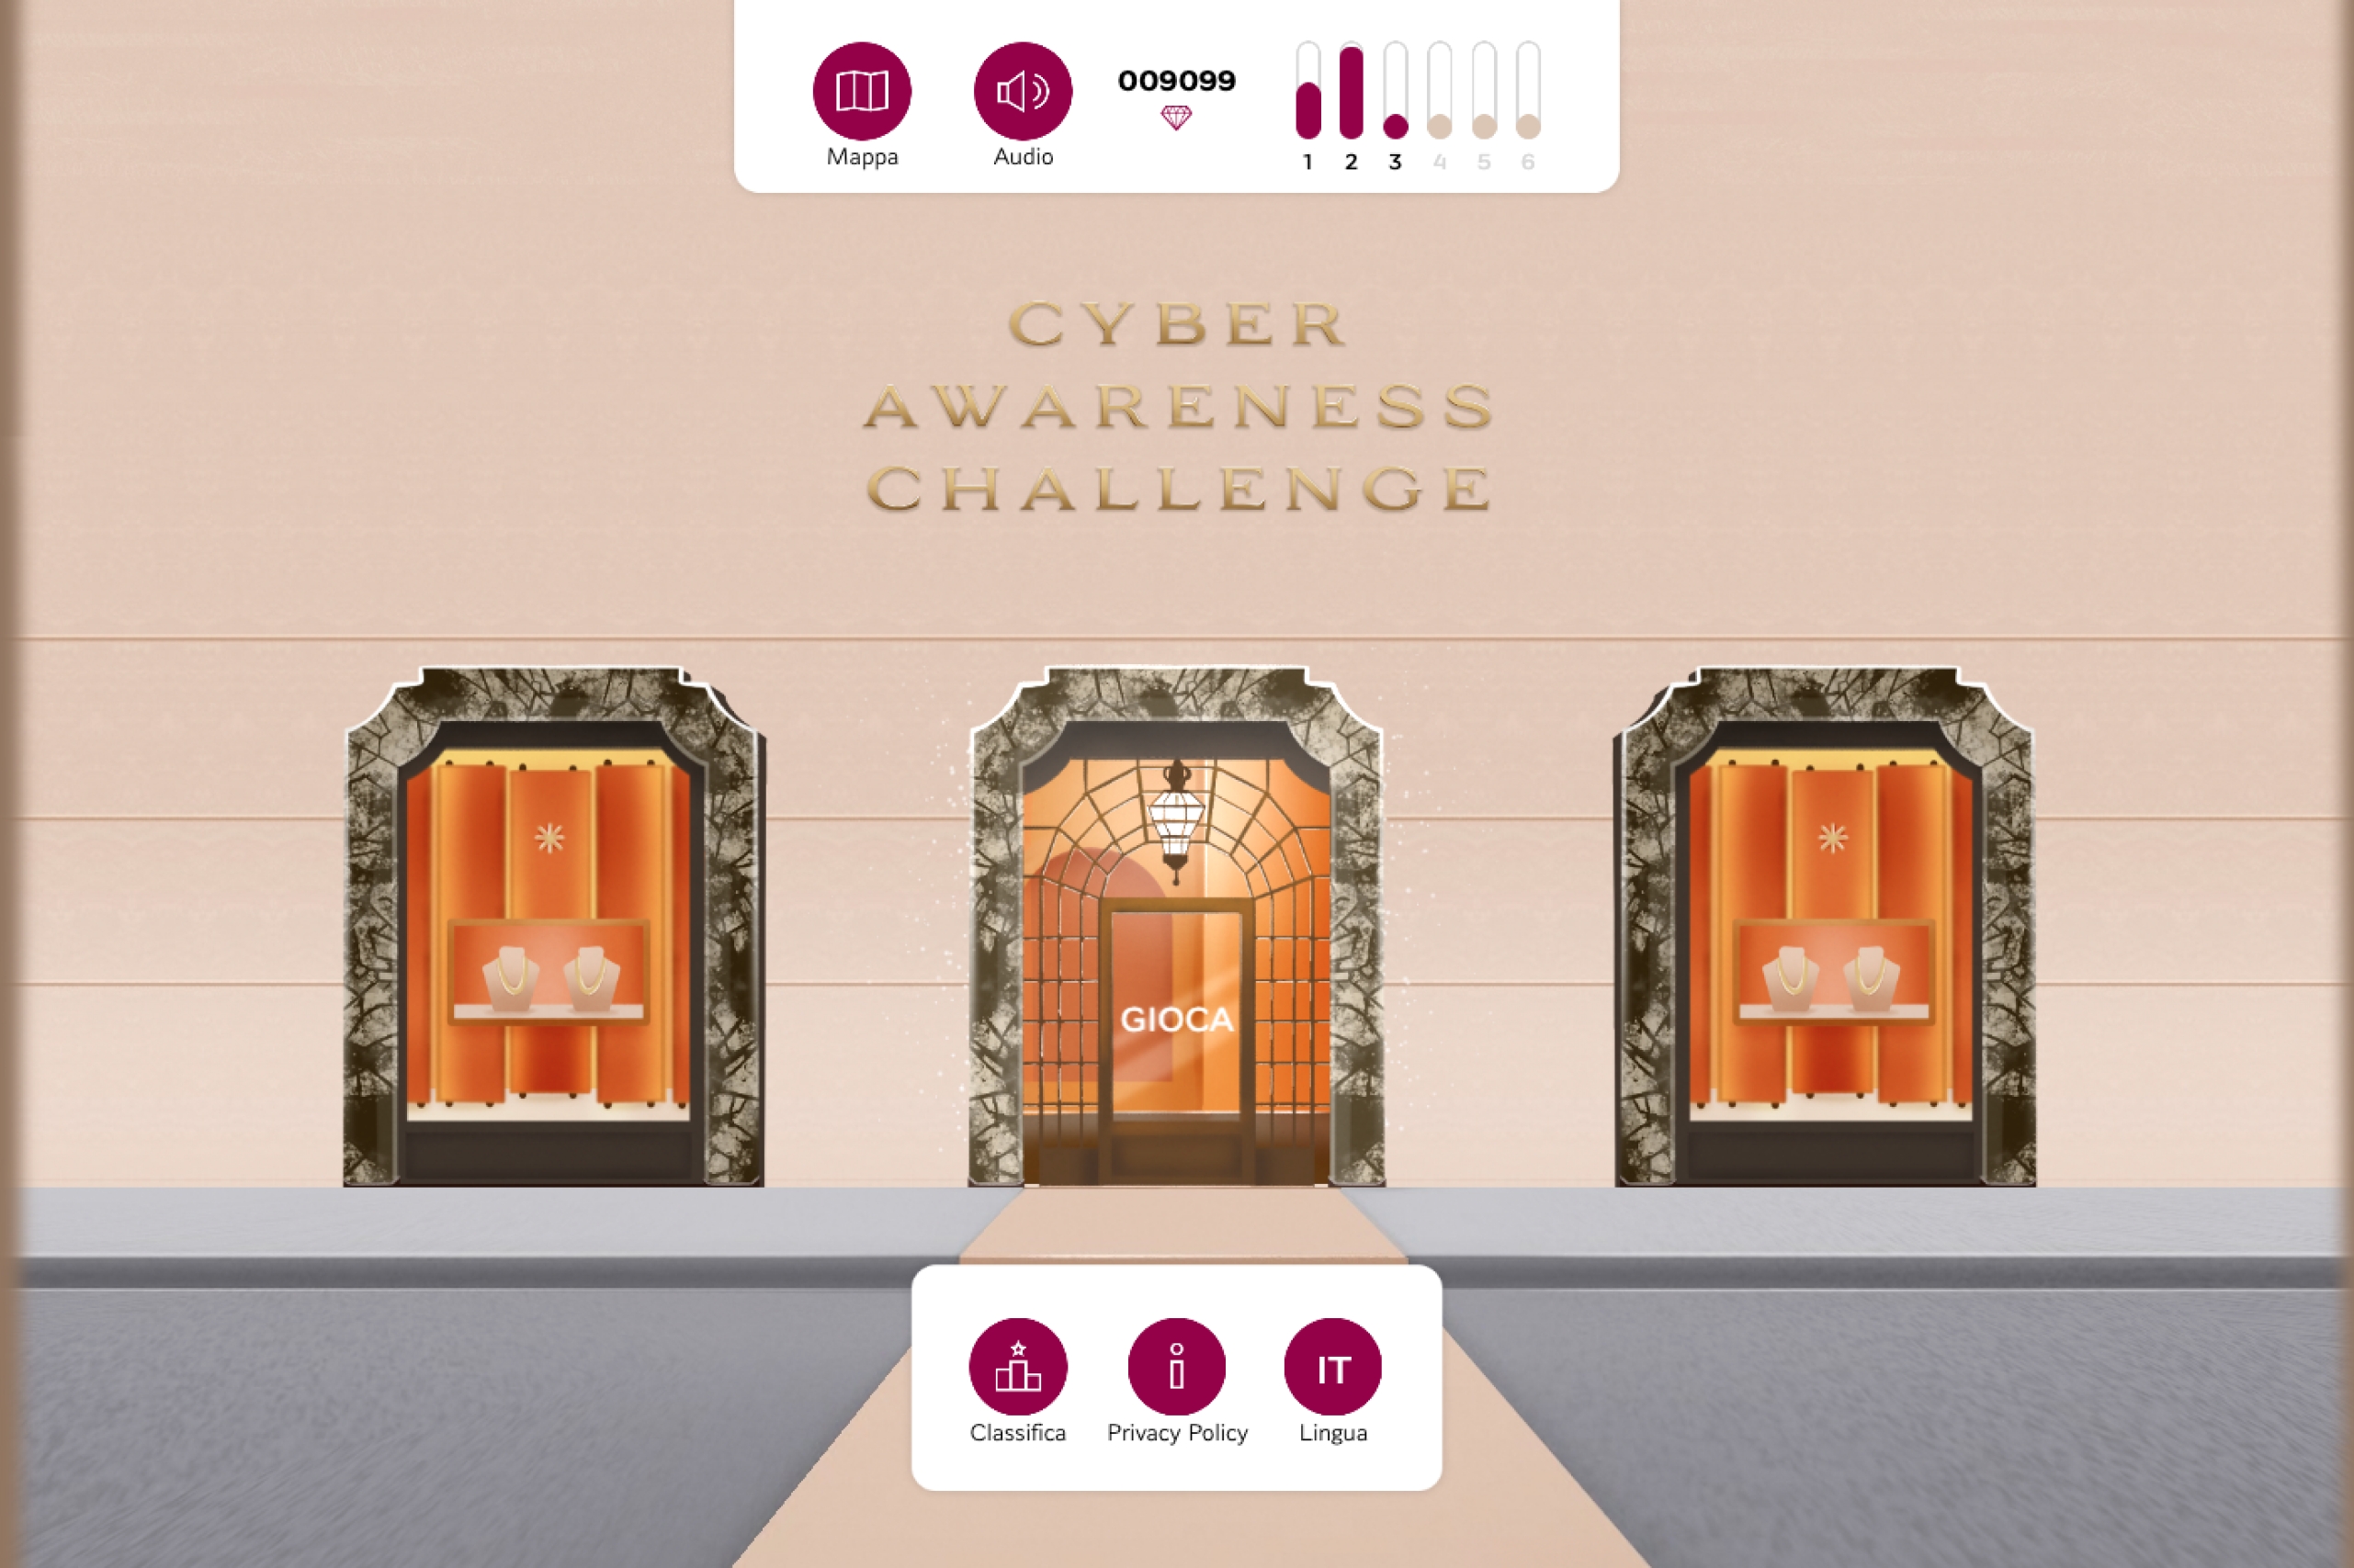 Cyber Awareness Challenge: cybersecurity game per Bulgari